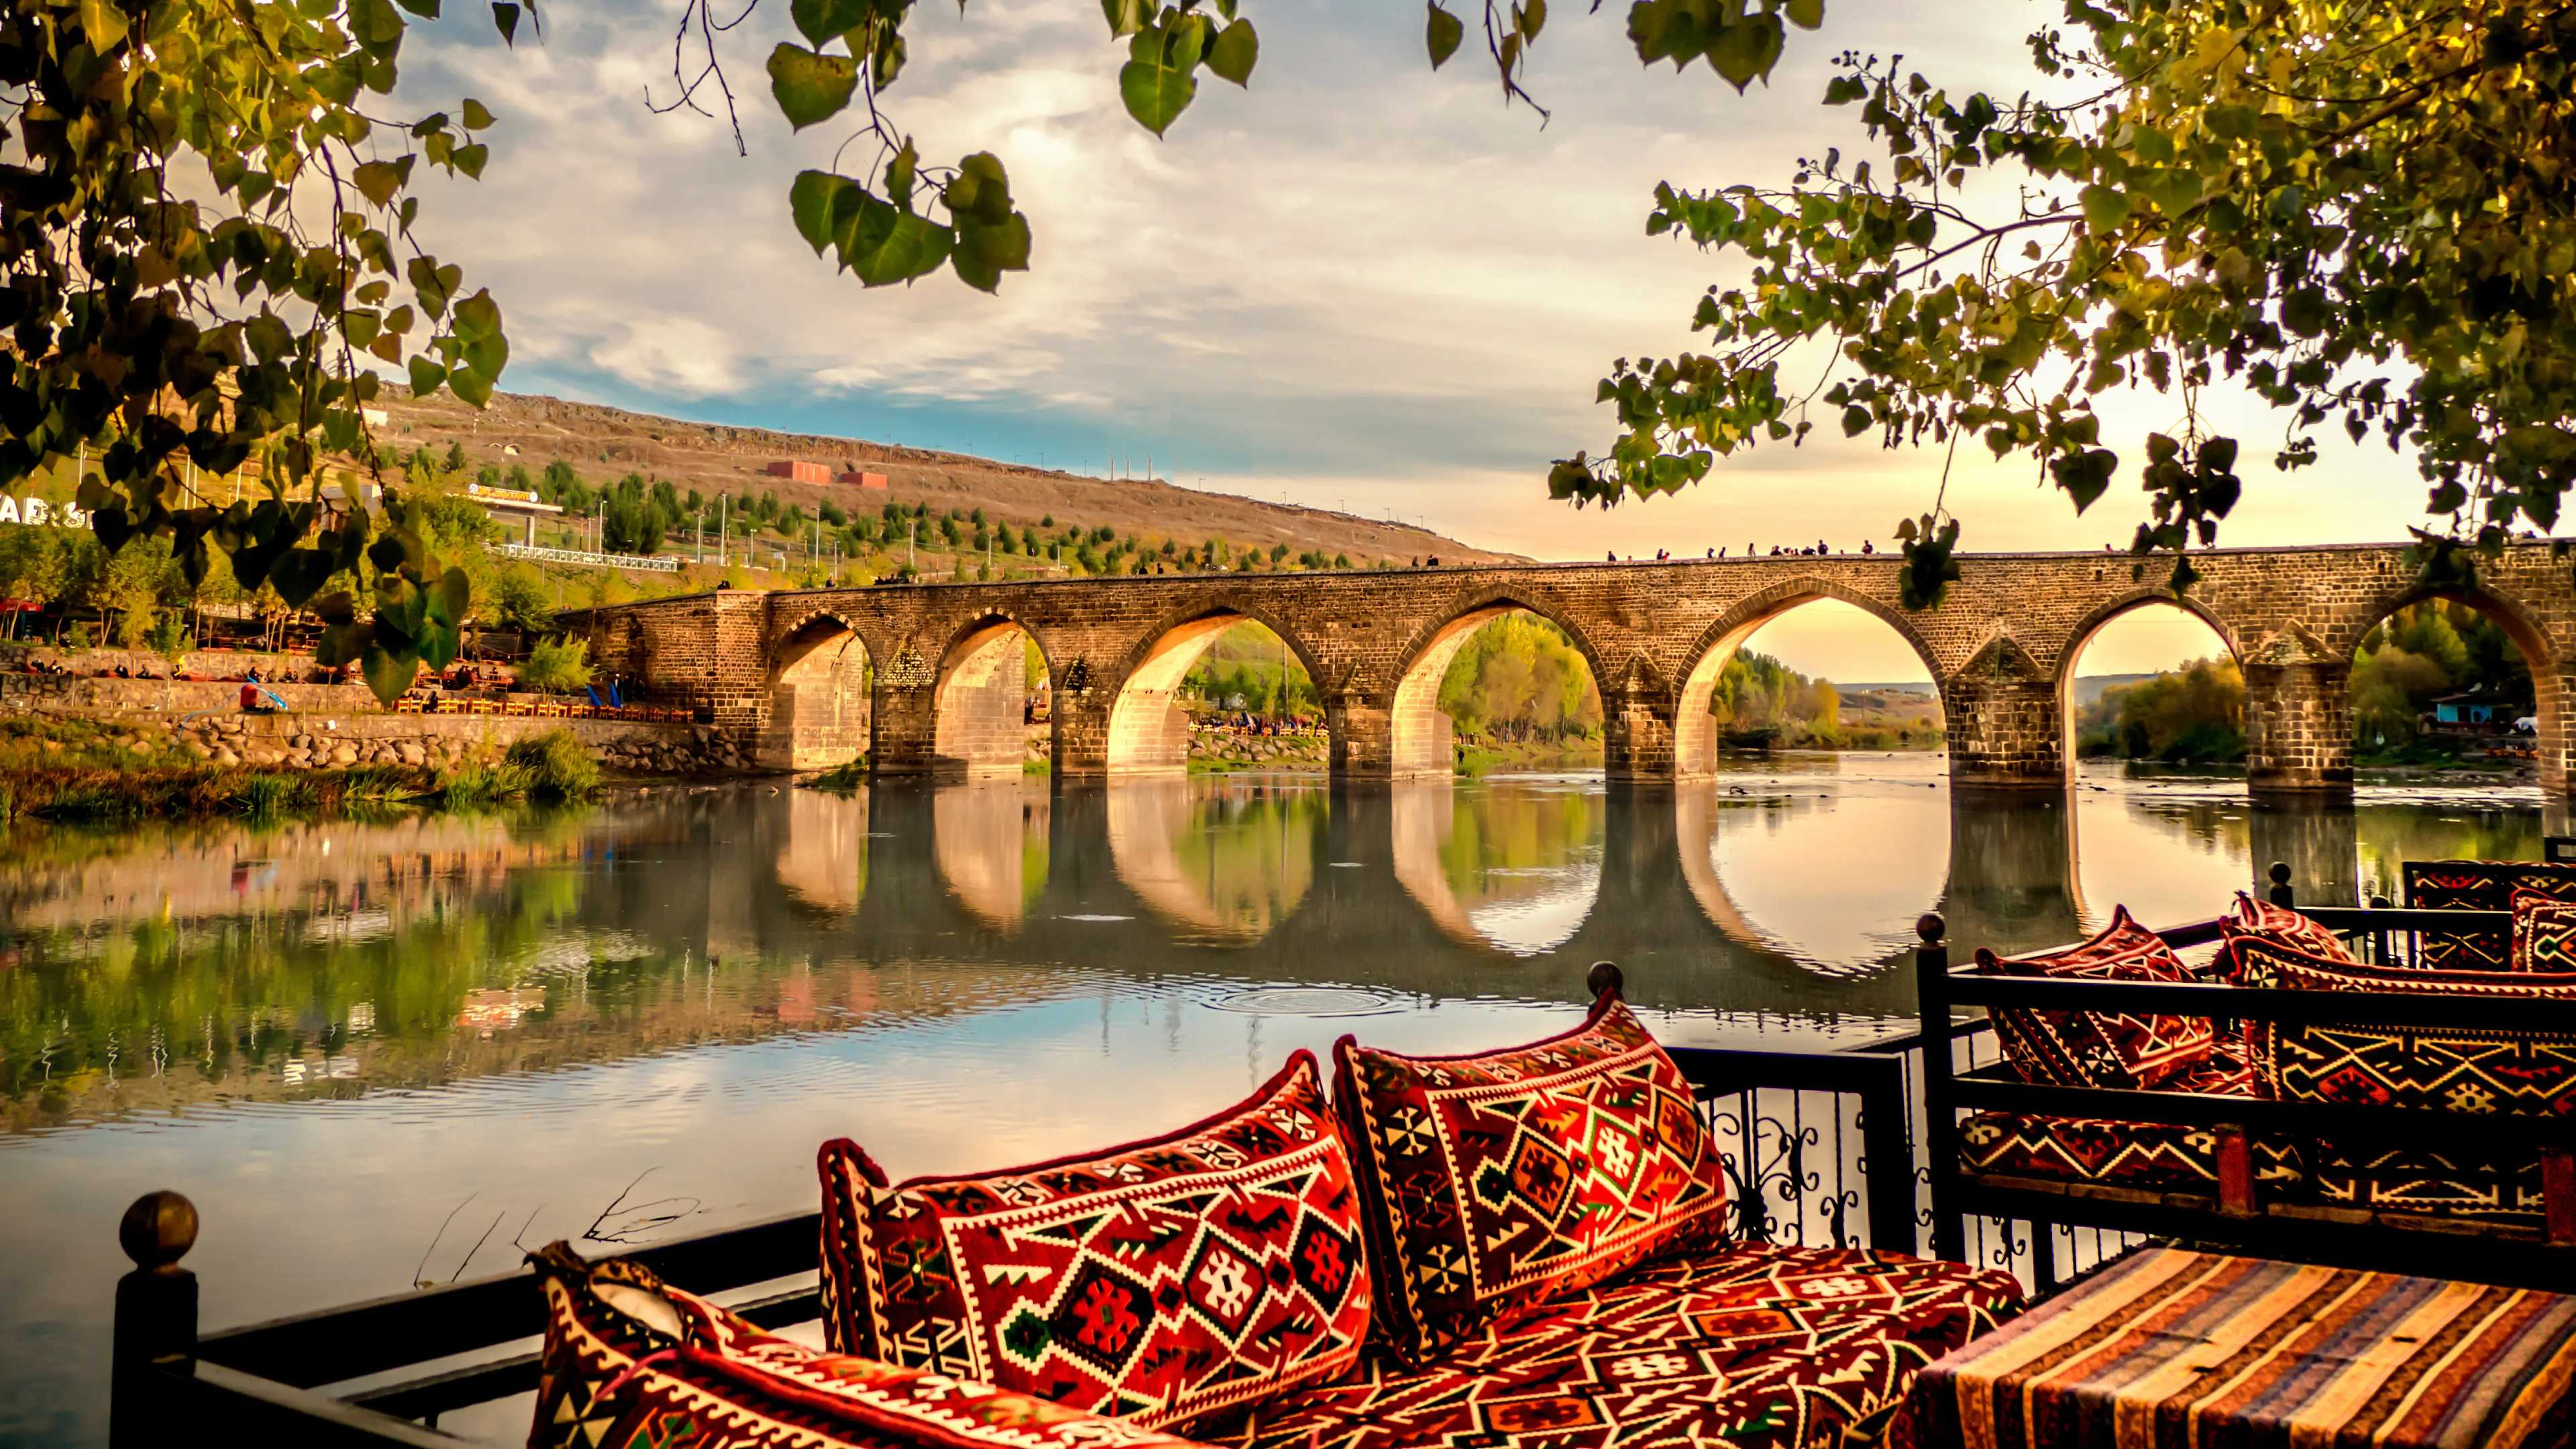 Ten Arch Bridge - Diyarbakir